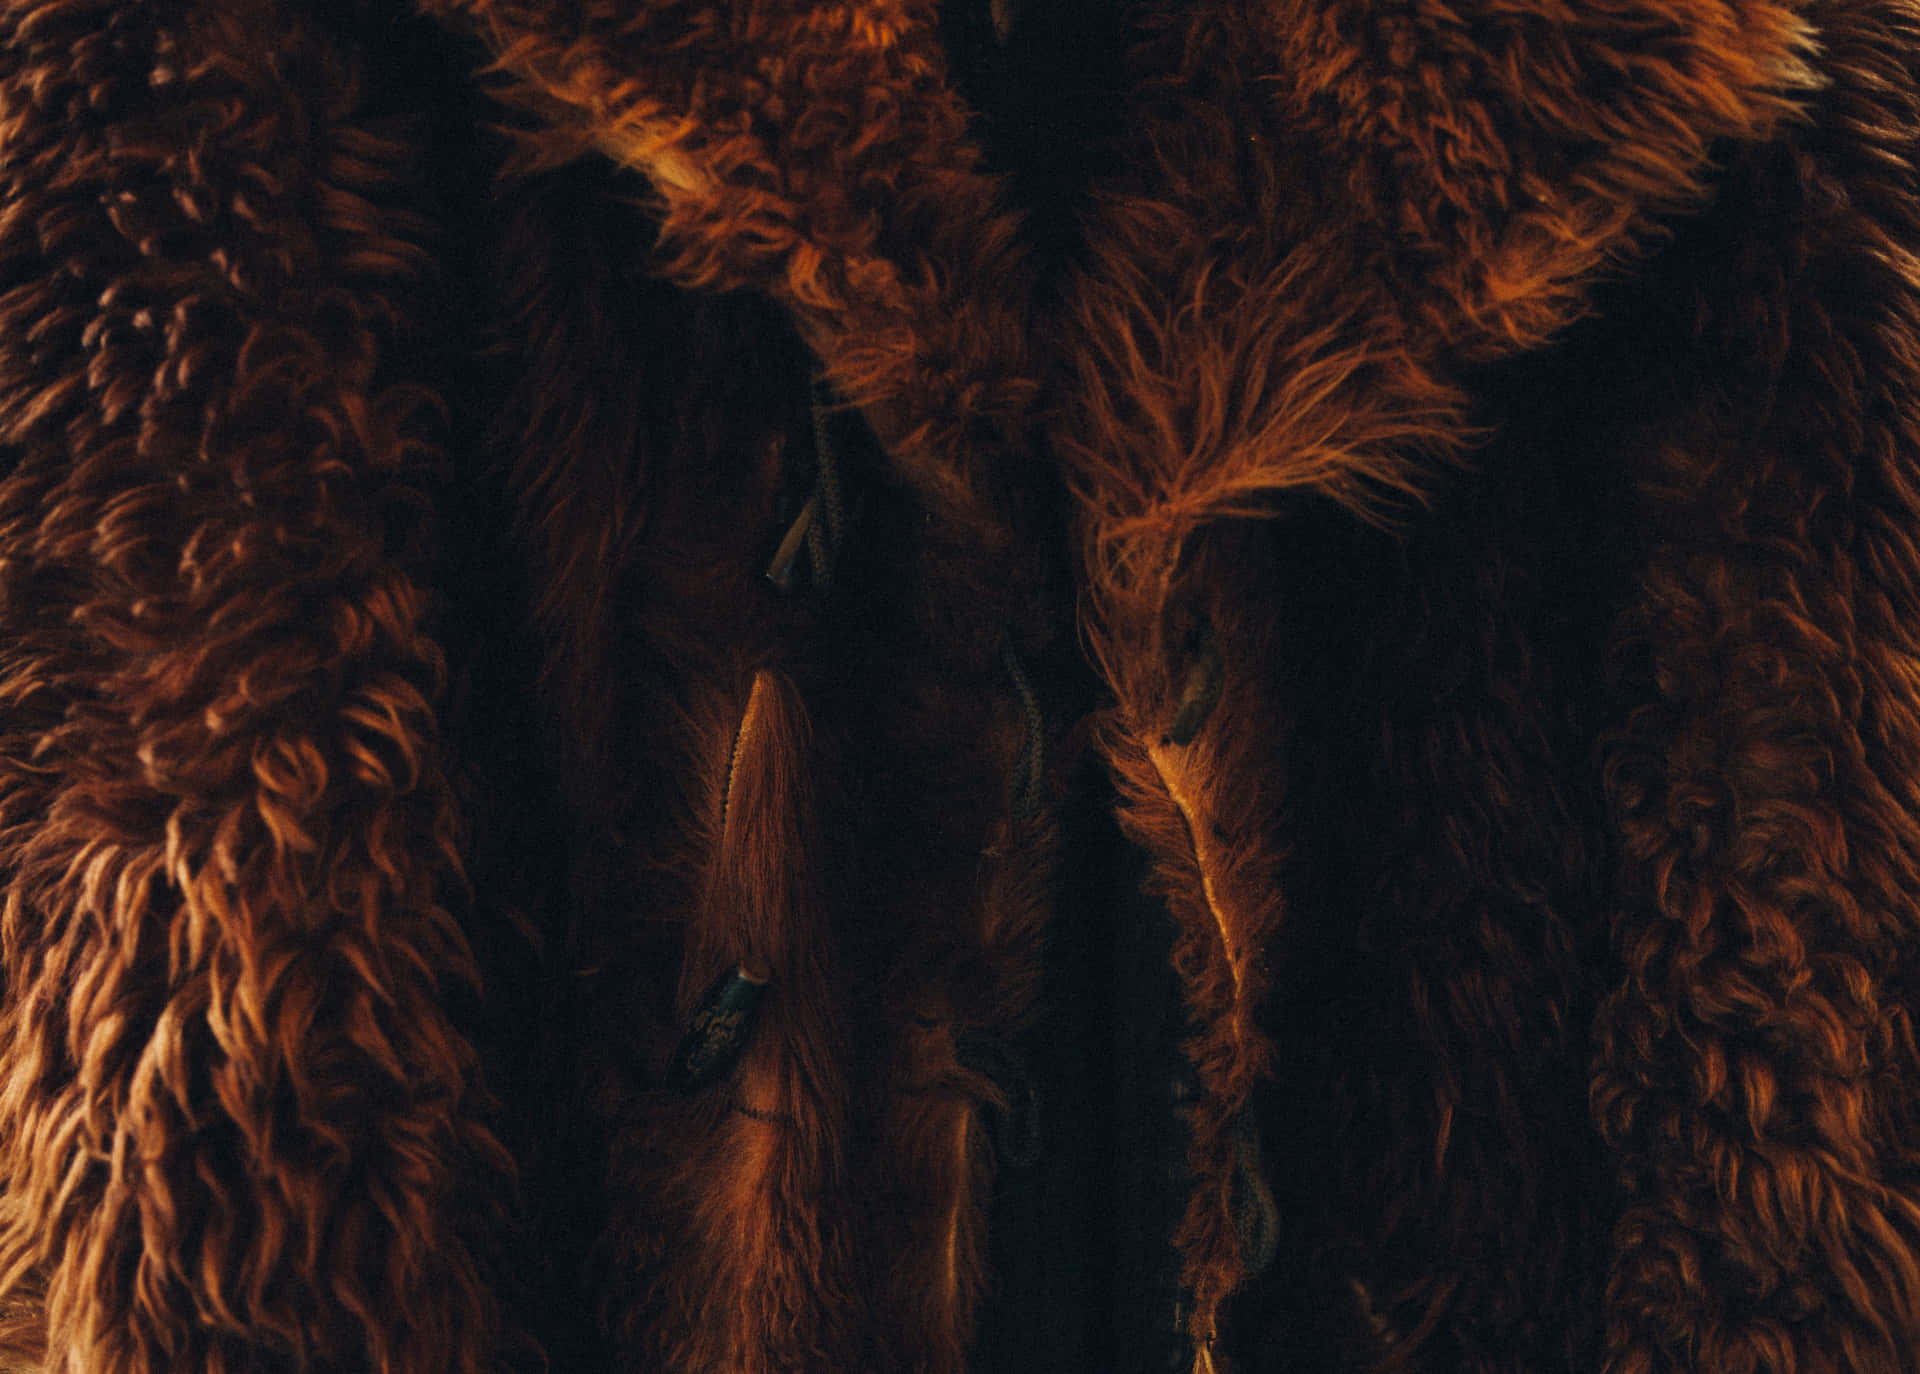 A Brown Fur Coat Hanging On A Hanger